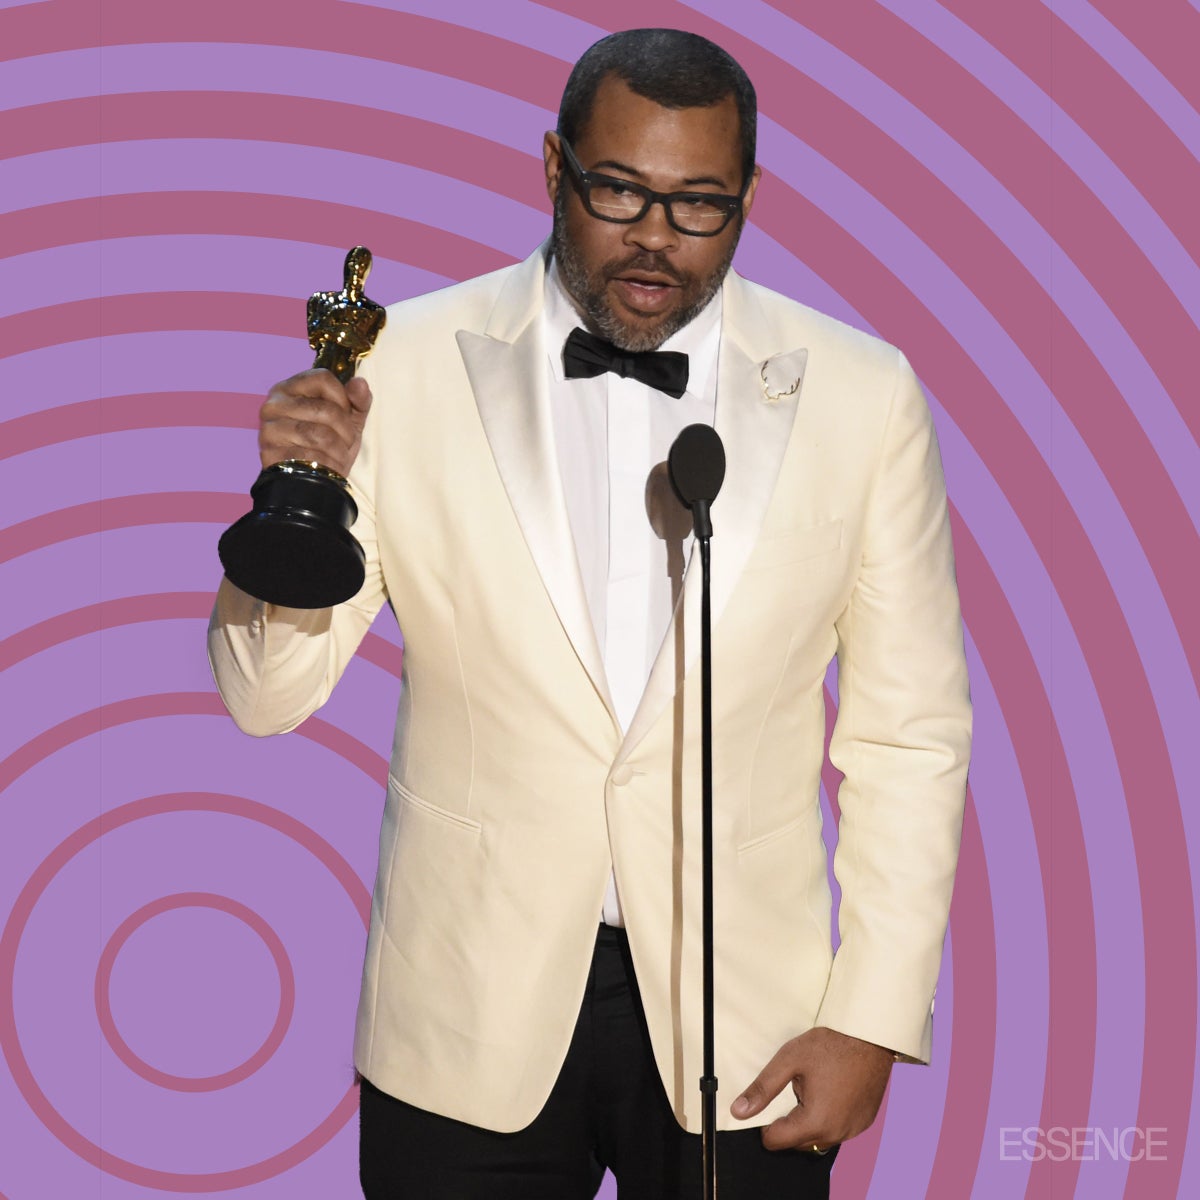 Oscars 2018: Jordan Peele Makes History As The First African American Writer To Win Best Original Screenplay
